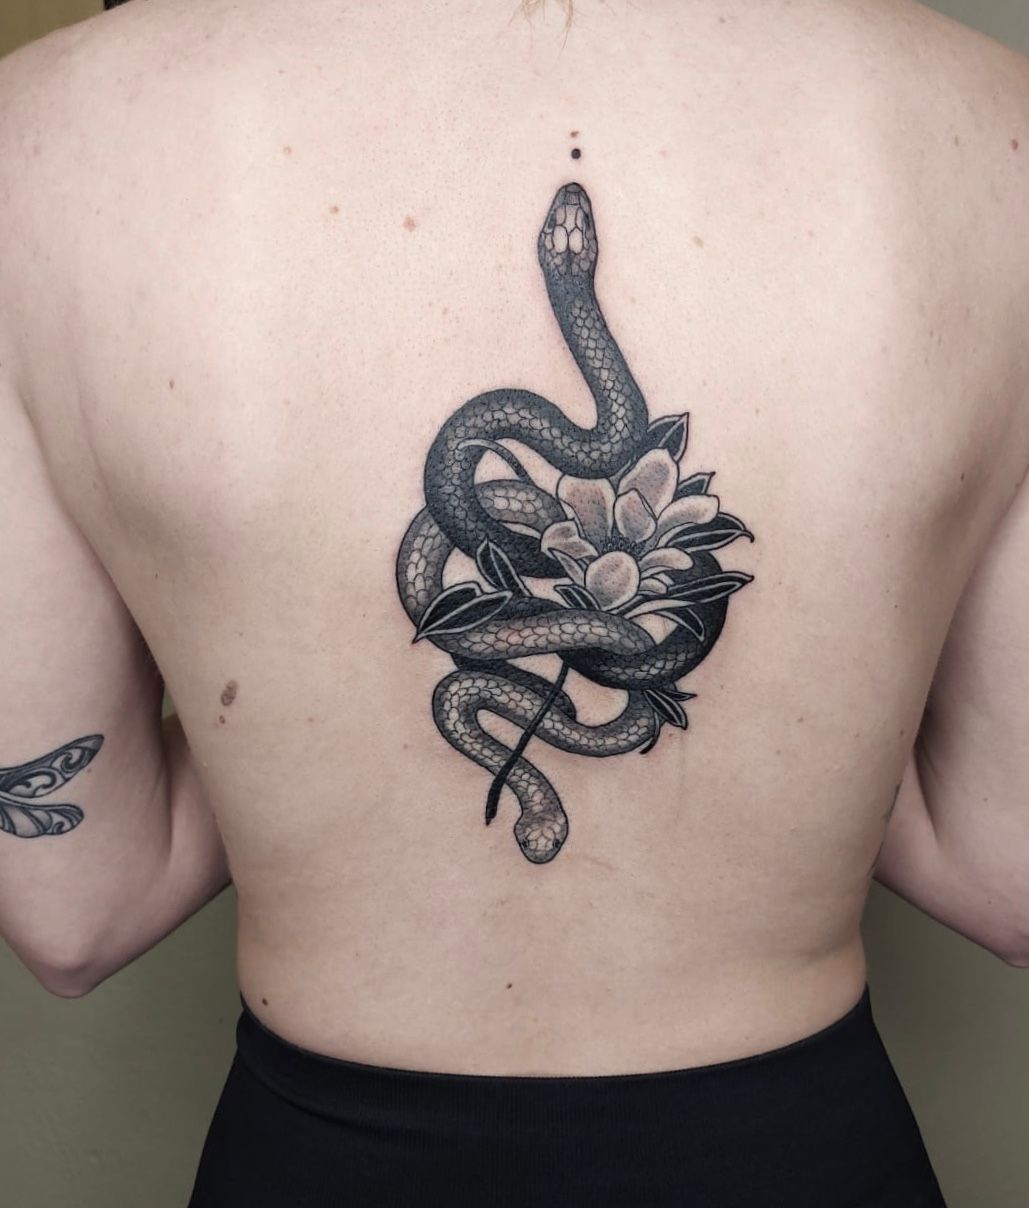 Mini Tattoos on Twitter Black amp White ink snake tattoo   httpstcog3ahQlerM6  Twitter